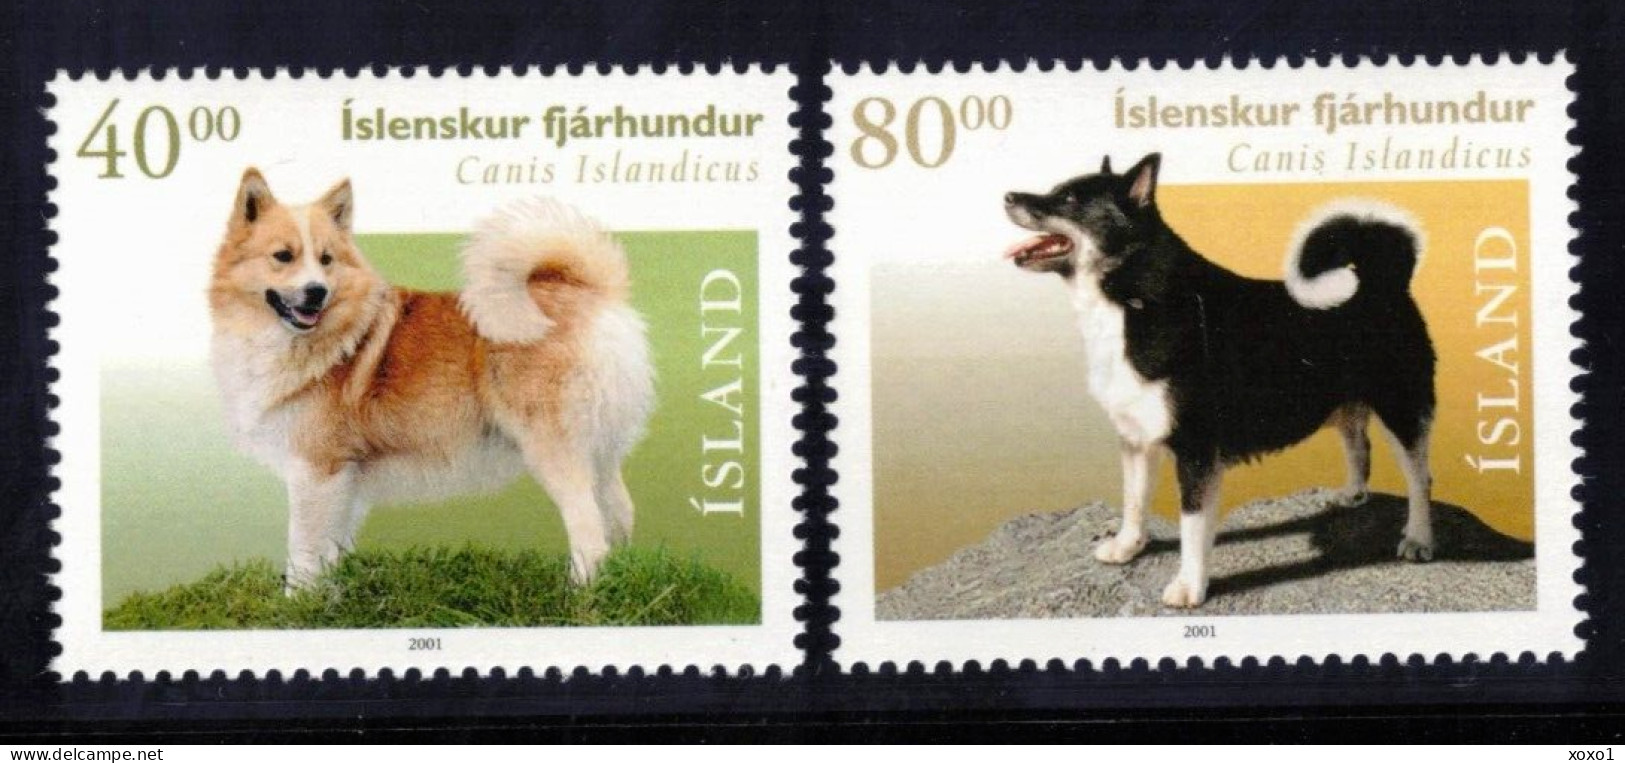 Iceland 2001 MiNr. 977 - 978 Island Mammals, Pets, Dogs, Icelandic Spitz 2v MNH** 4.00 € - Dogs